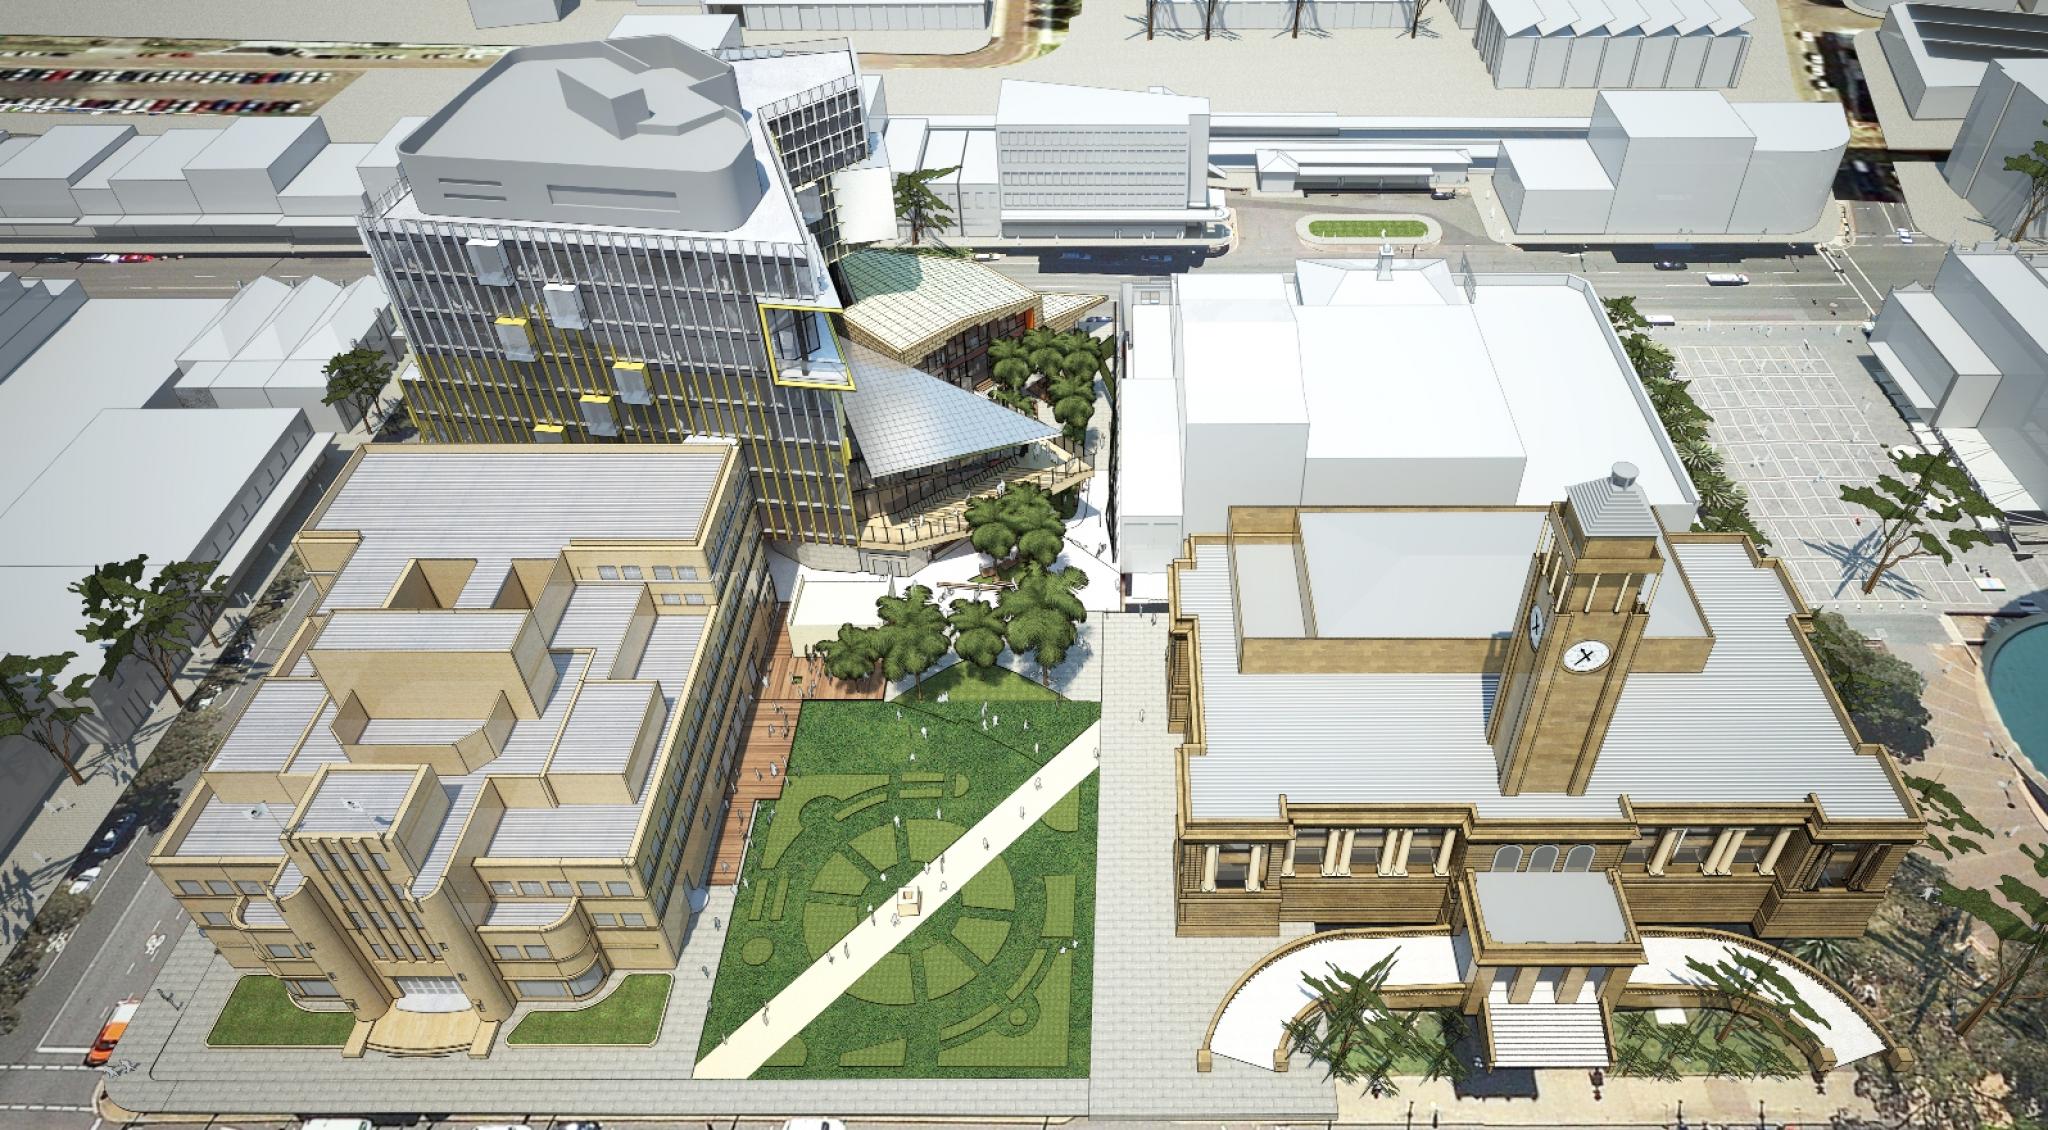 NewSpace design reflects Newcastle’s renewal strategy